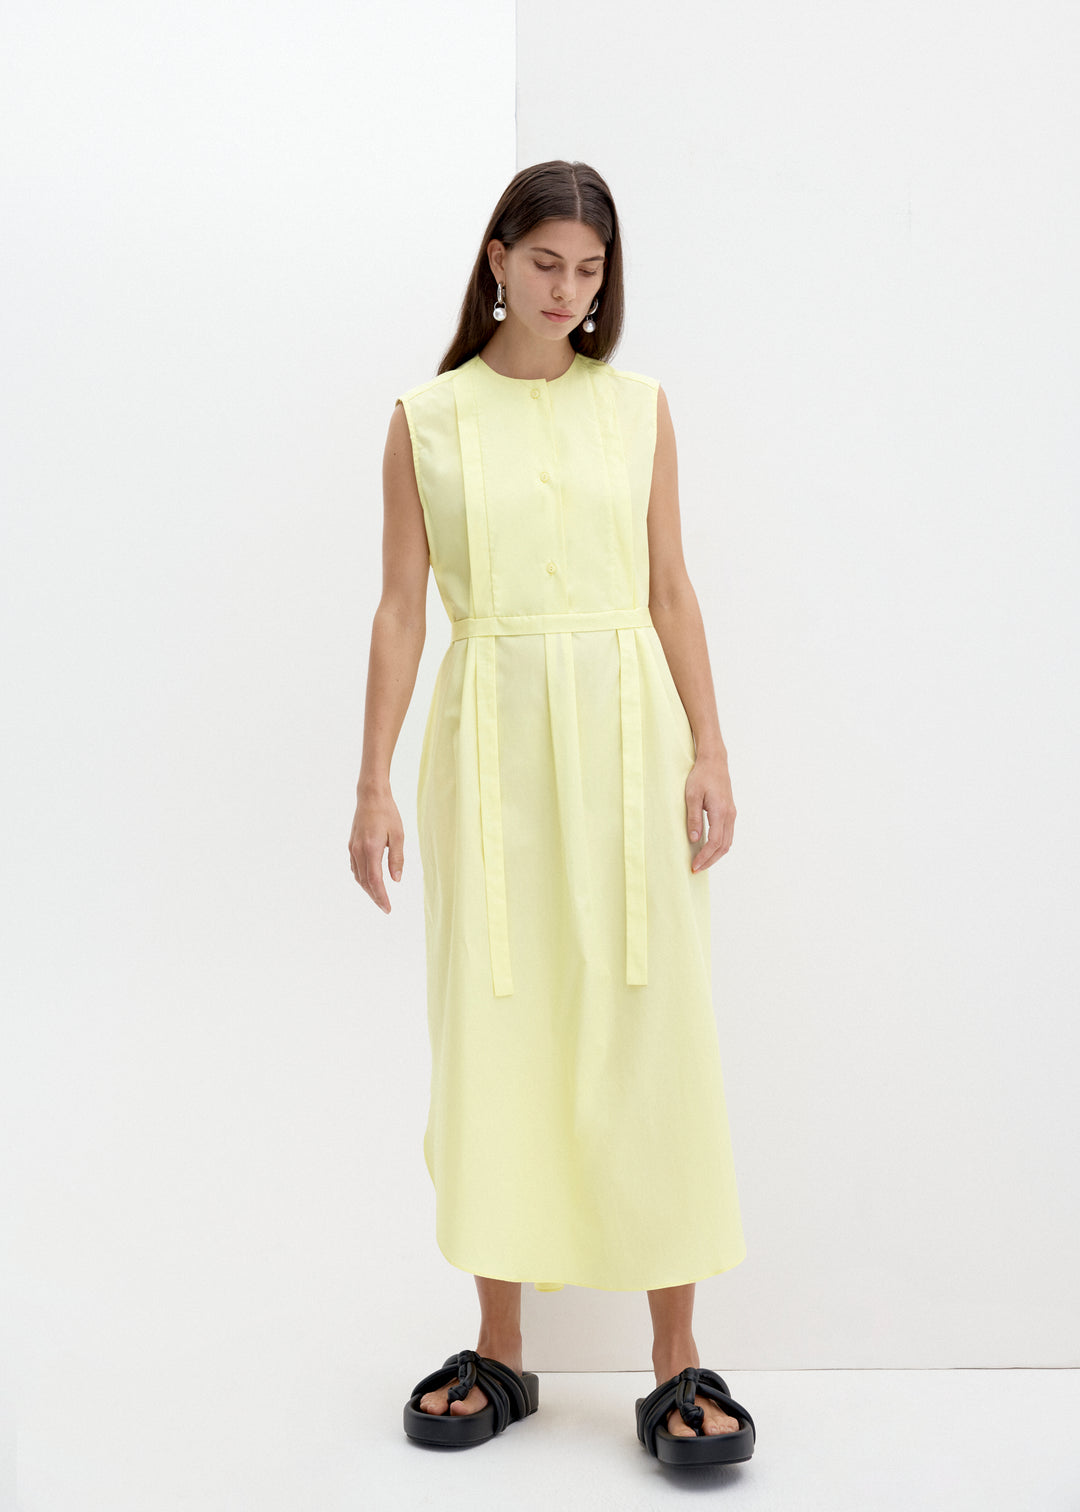  Public Figure | Foemina | Paisley Dress - Yellow